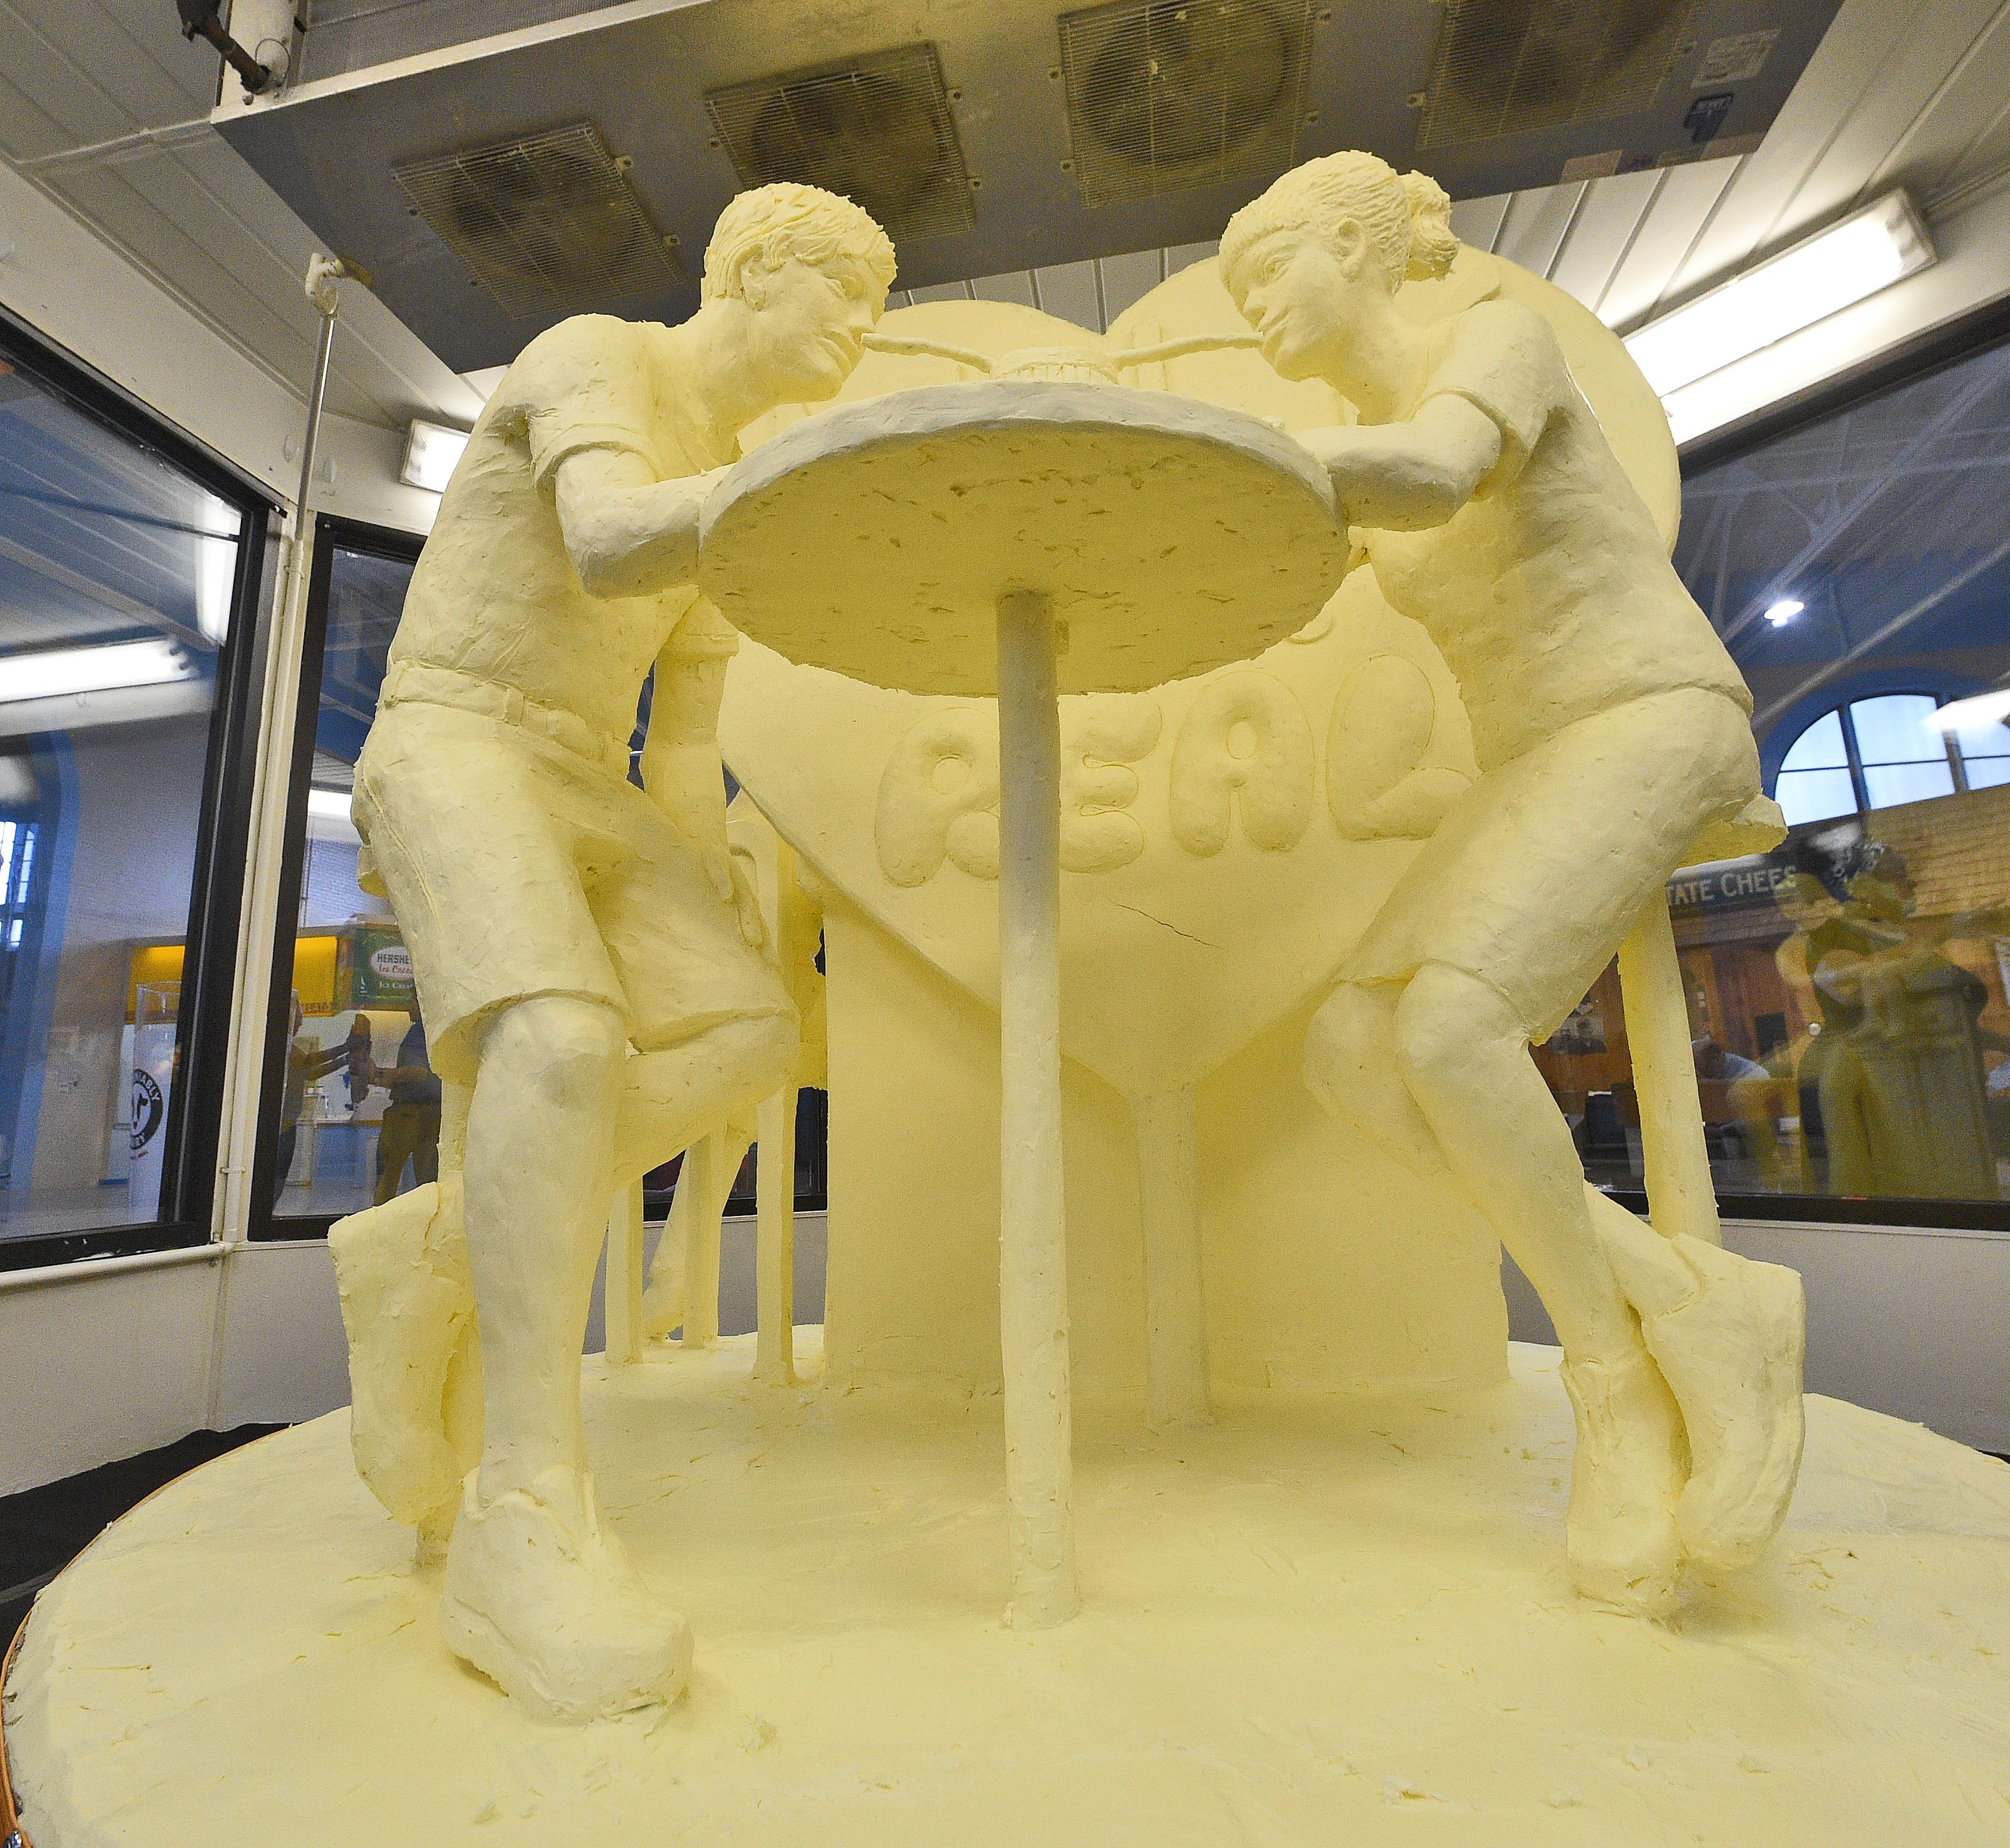 New York State Fair 2019 butter sculpture revealed 